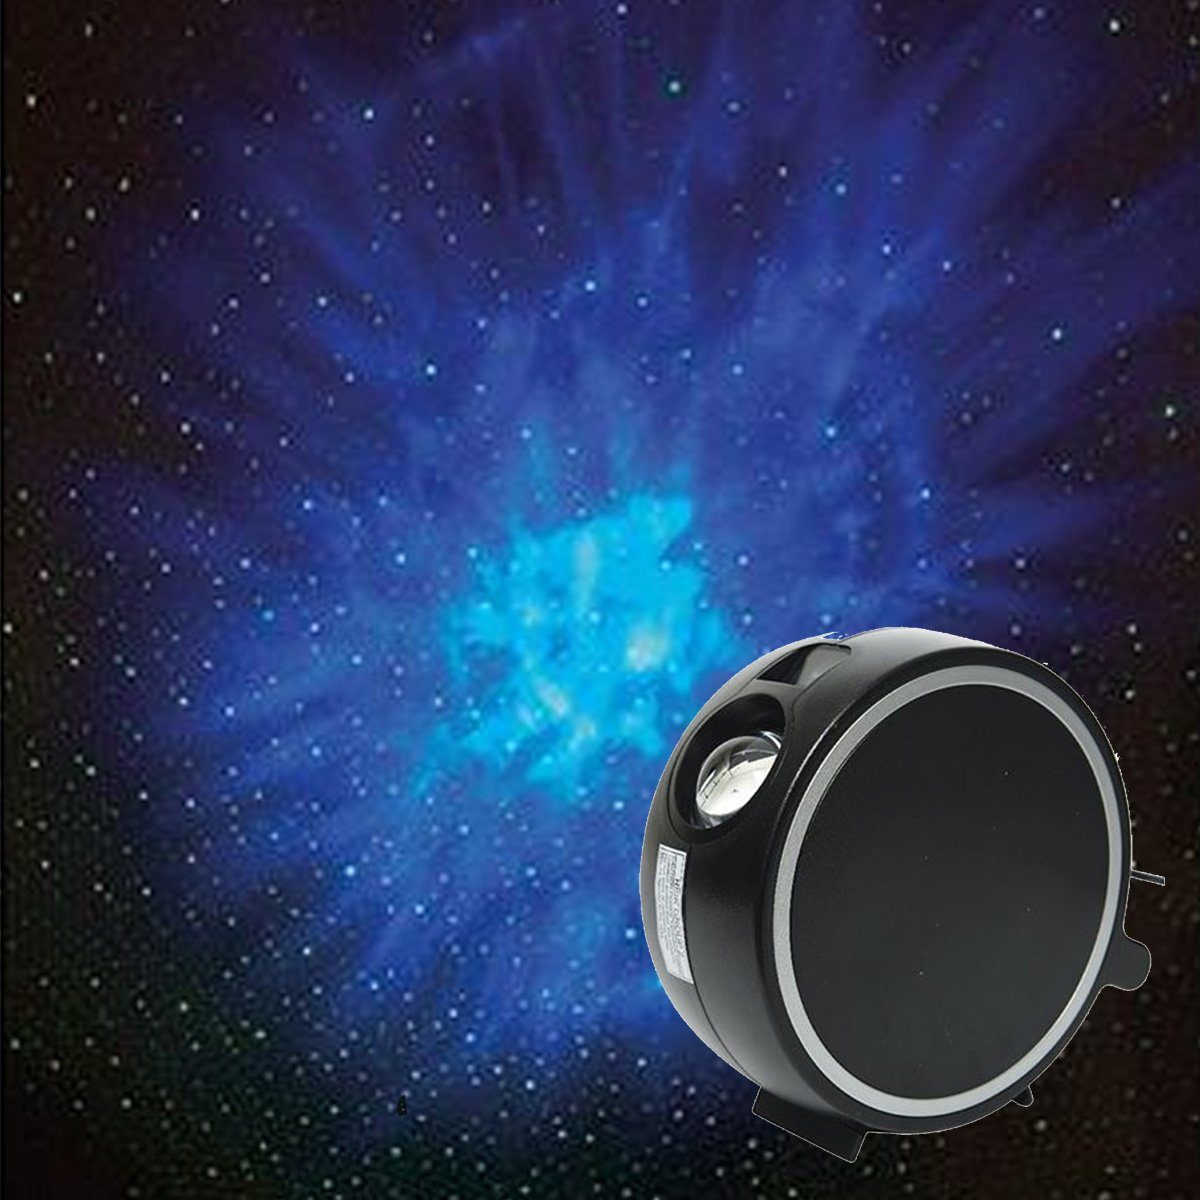 https://i.otto.de/i/otto/0755625e-8223-5de4-88ca-4846314485e6/satisfire-led-sternenhimmel-laser-nebelprojektor-universe-skyprojektor-ambientelichteffekt.jpg?$formatz$